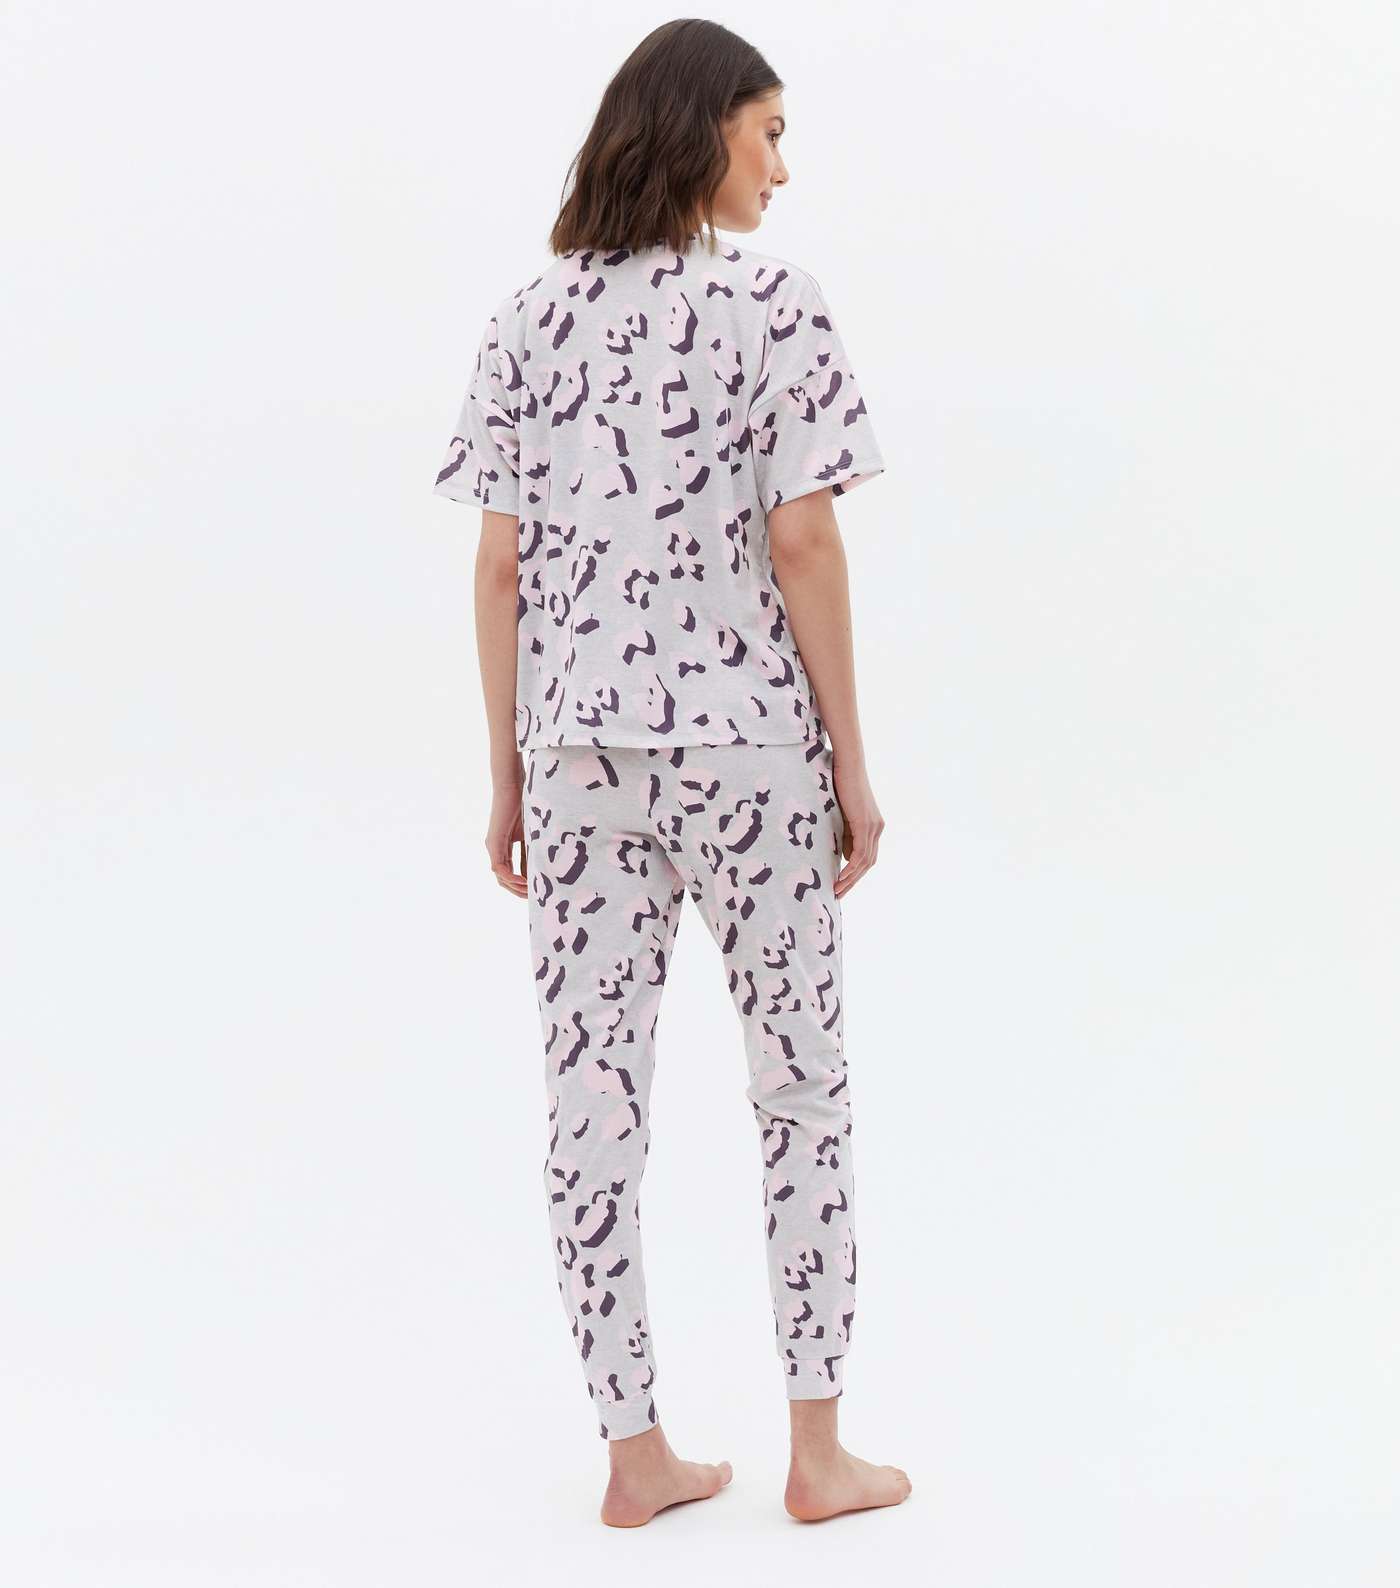 Light Grey Soft Touch Legging Pyjama Set with Animal Print Image 4